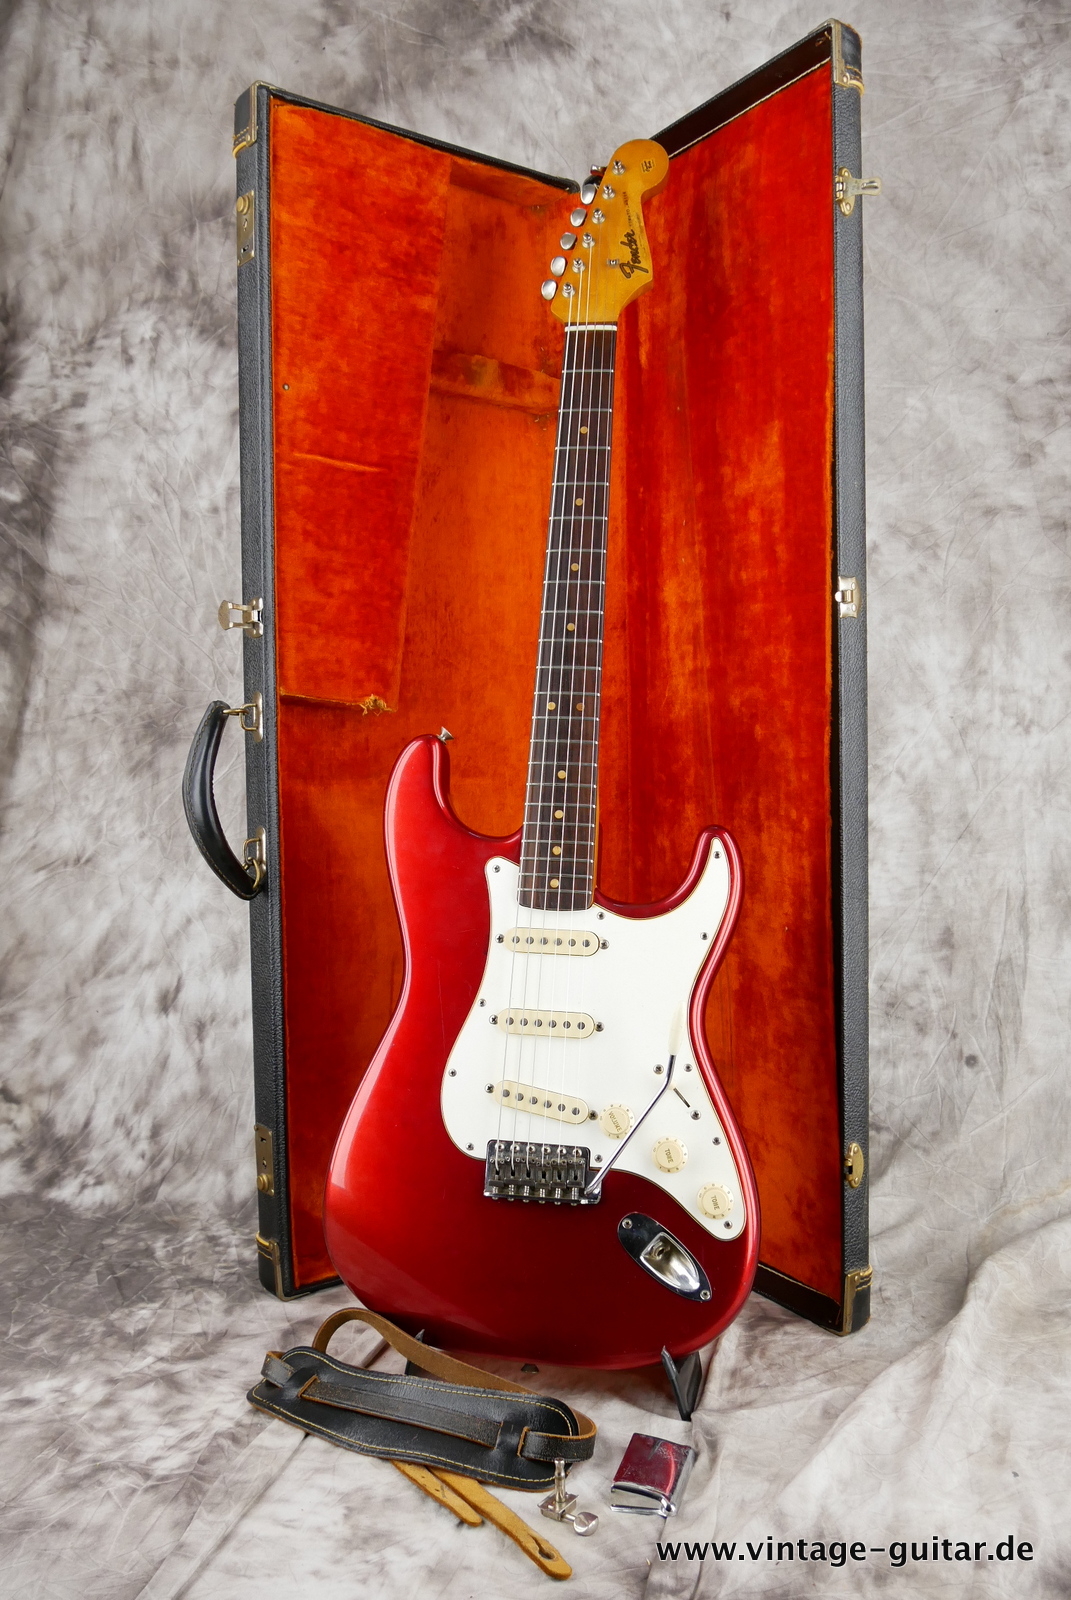 Fender-Stratocaster-1964-candy-apple-red-031.JPG